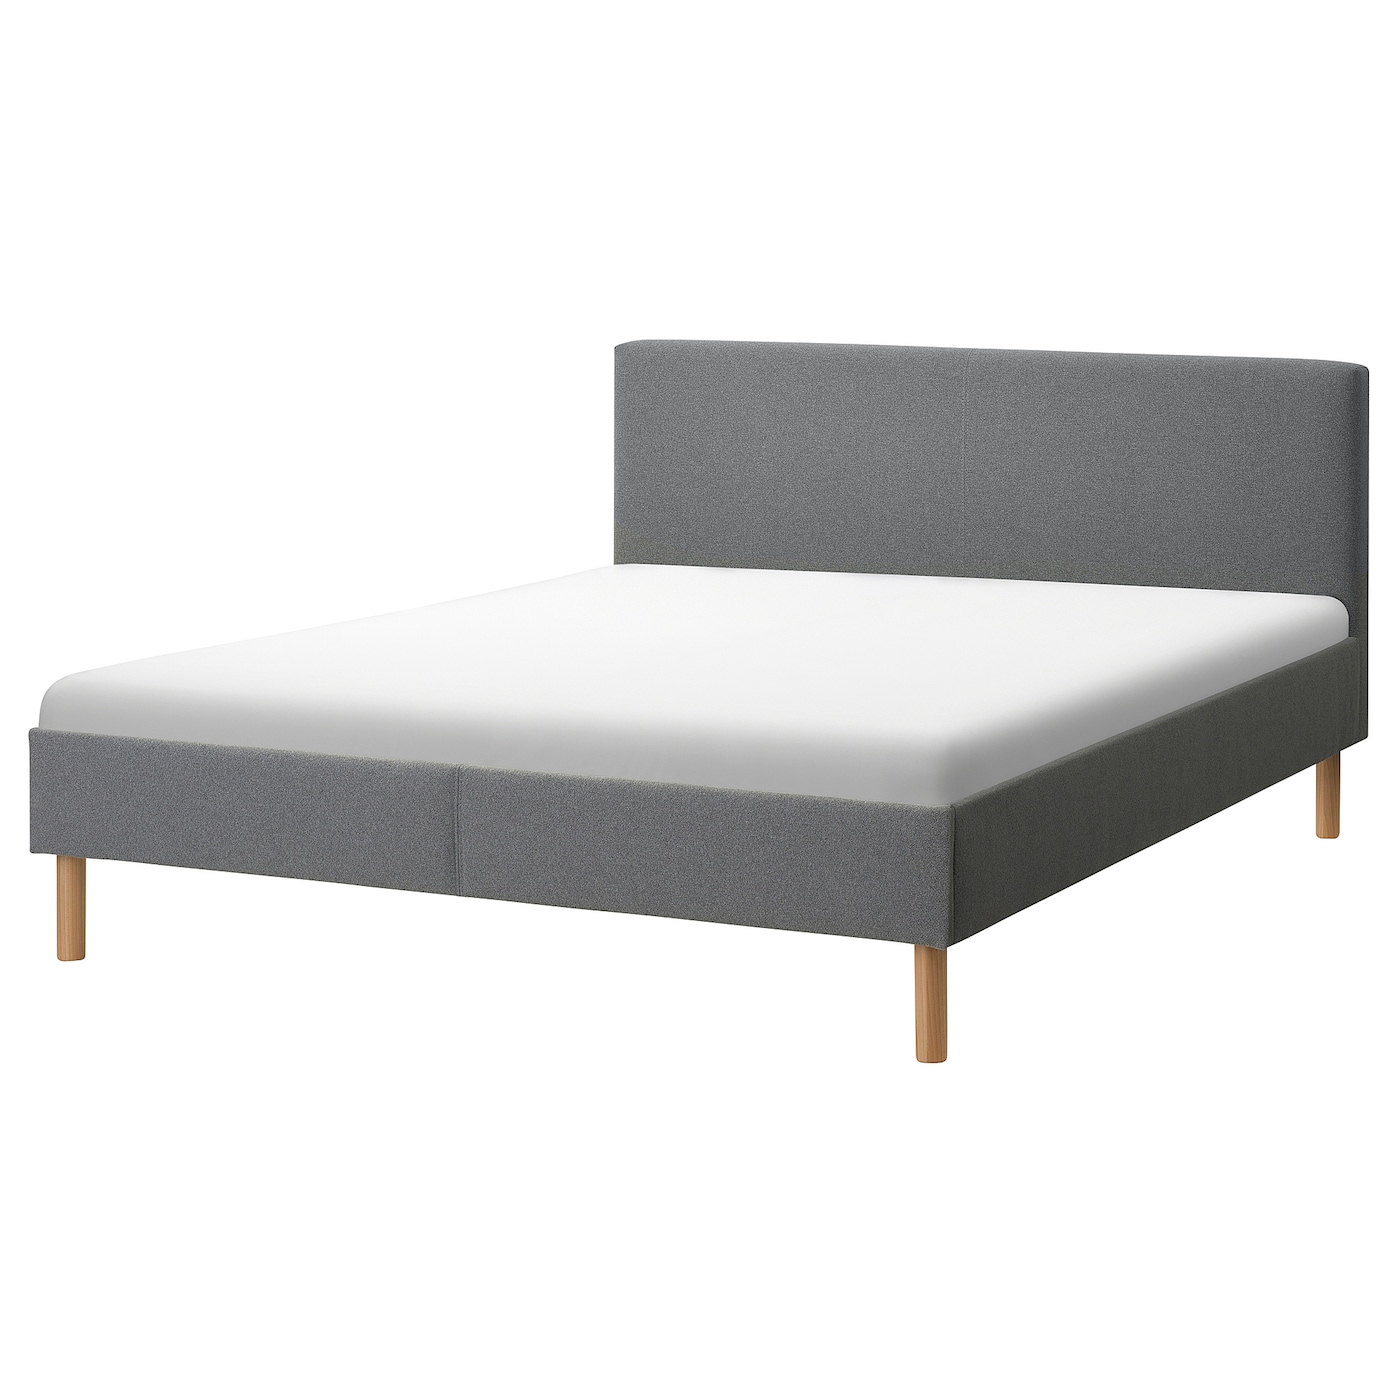 Каркас кровати с мягкой обивкой - IKEA NARRÖN/NARRON, 200х140 см, серый, НЭРРОН ИКЕА